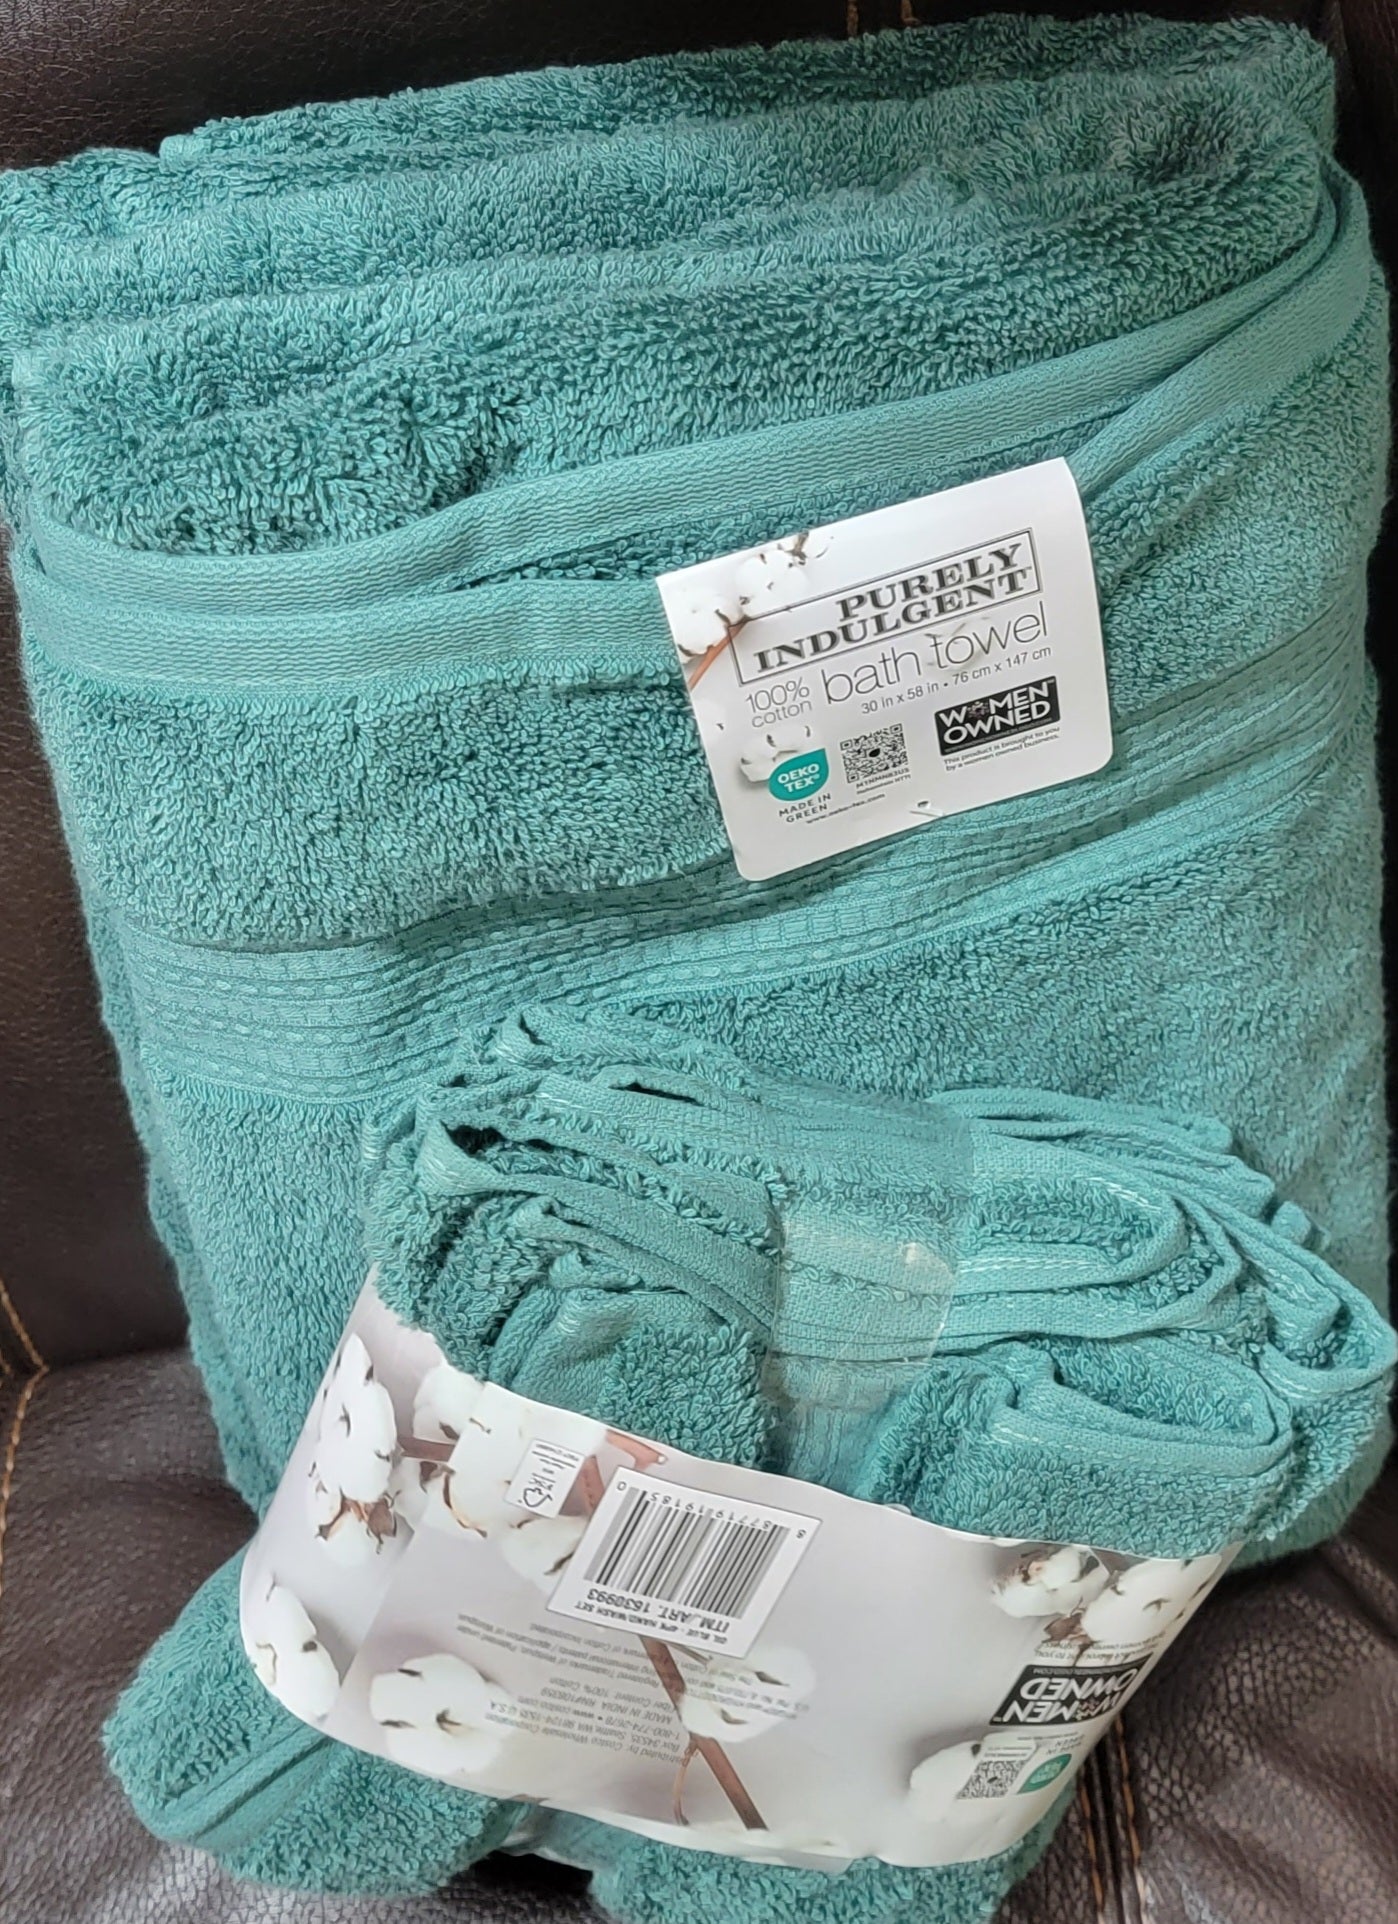 Purely Indulgent 100% Hygrocotton 6-Piece Towel Set, 2-Bath, 2-Hand, 2-WASH (Color: Oil Blue)